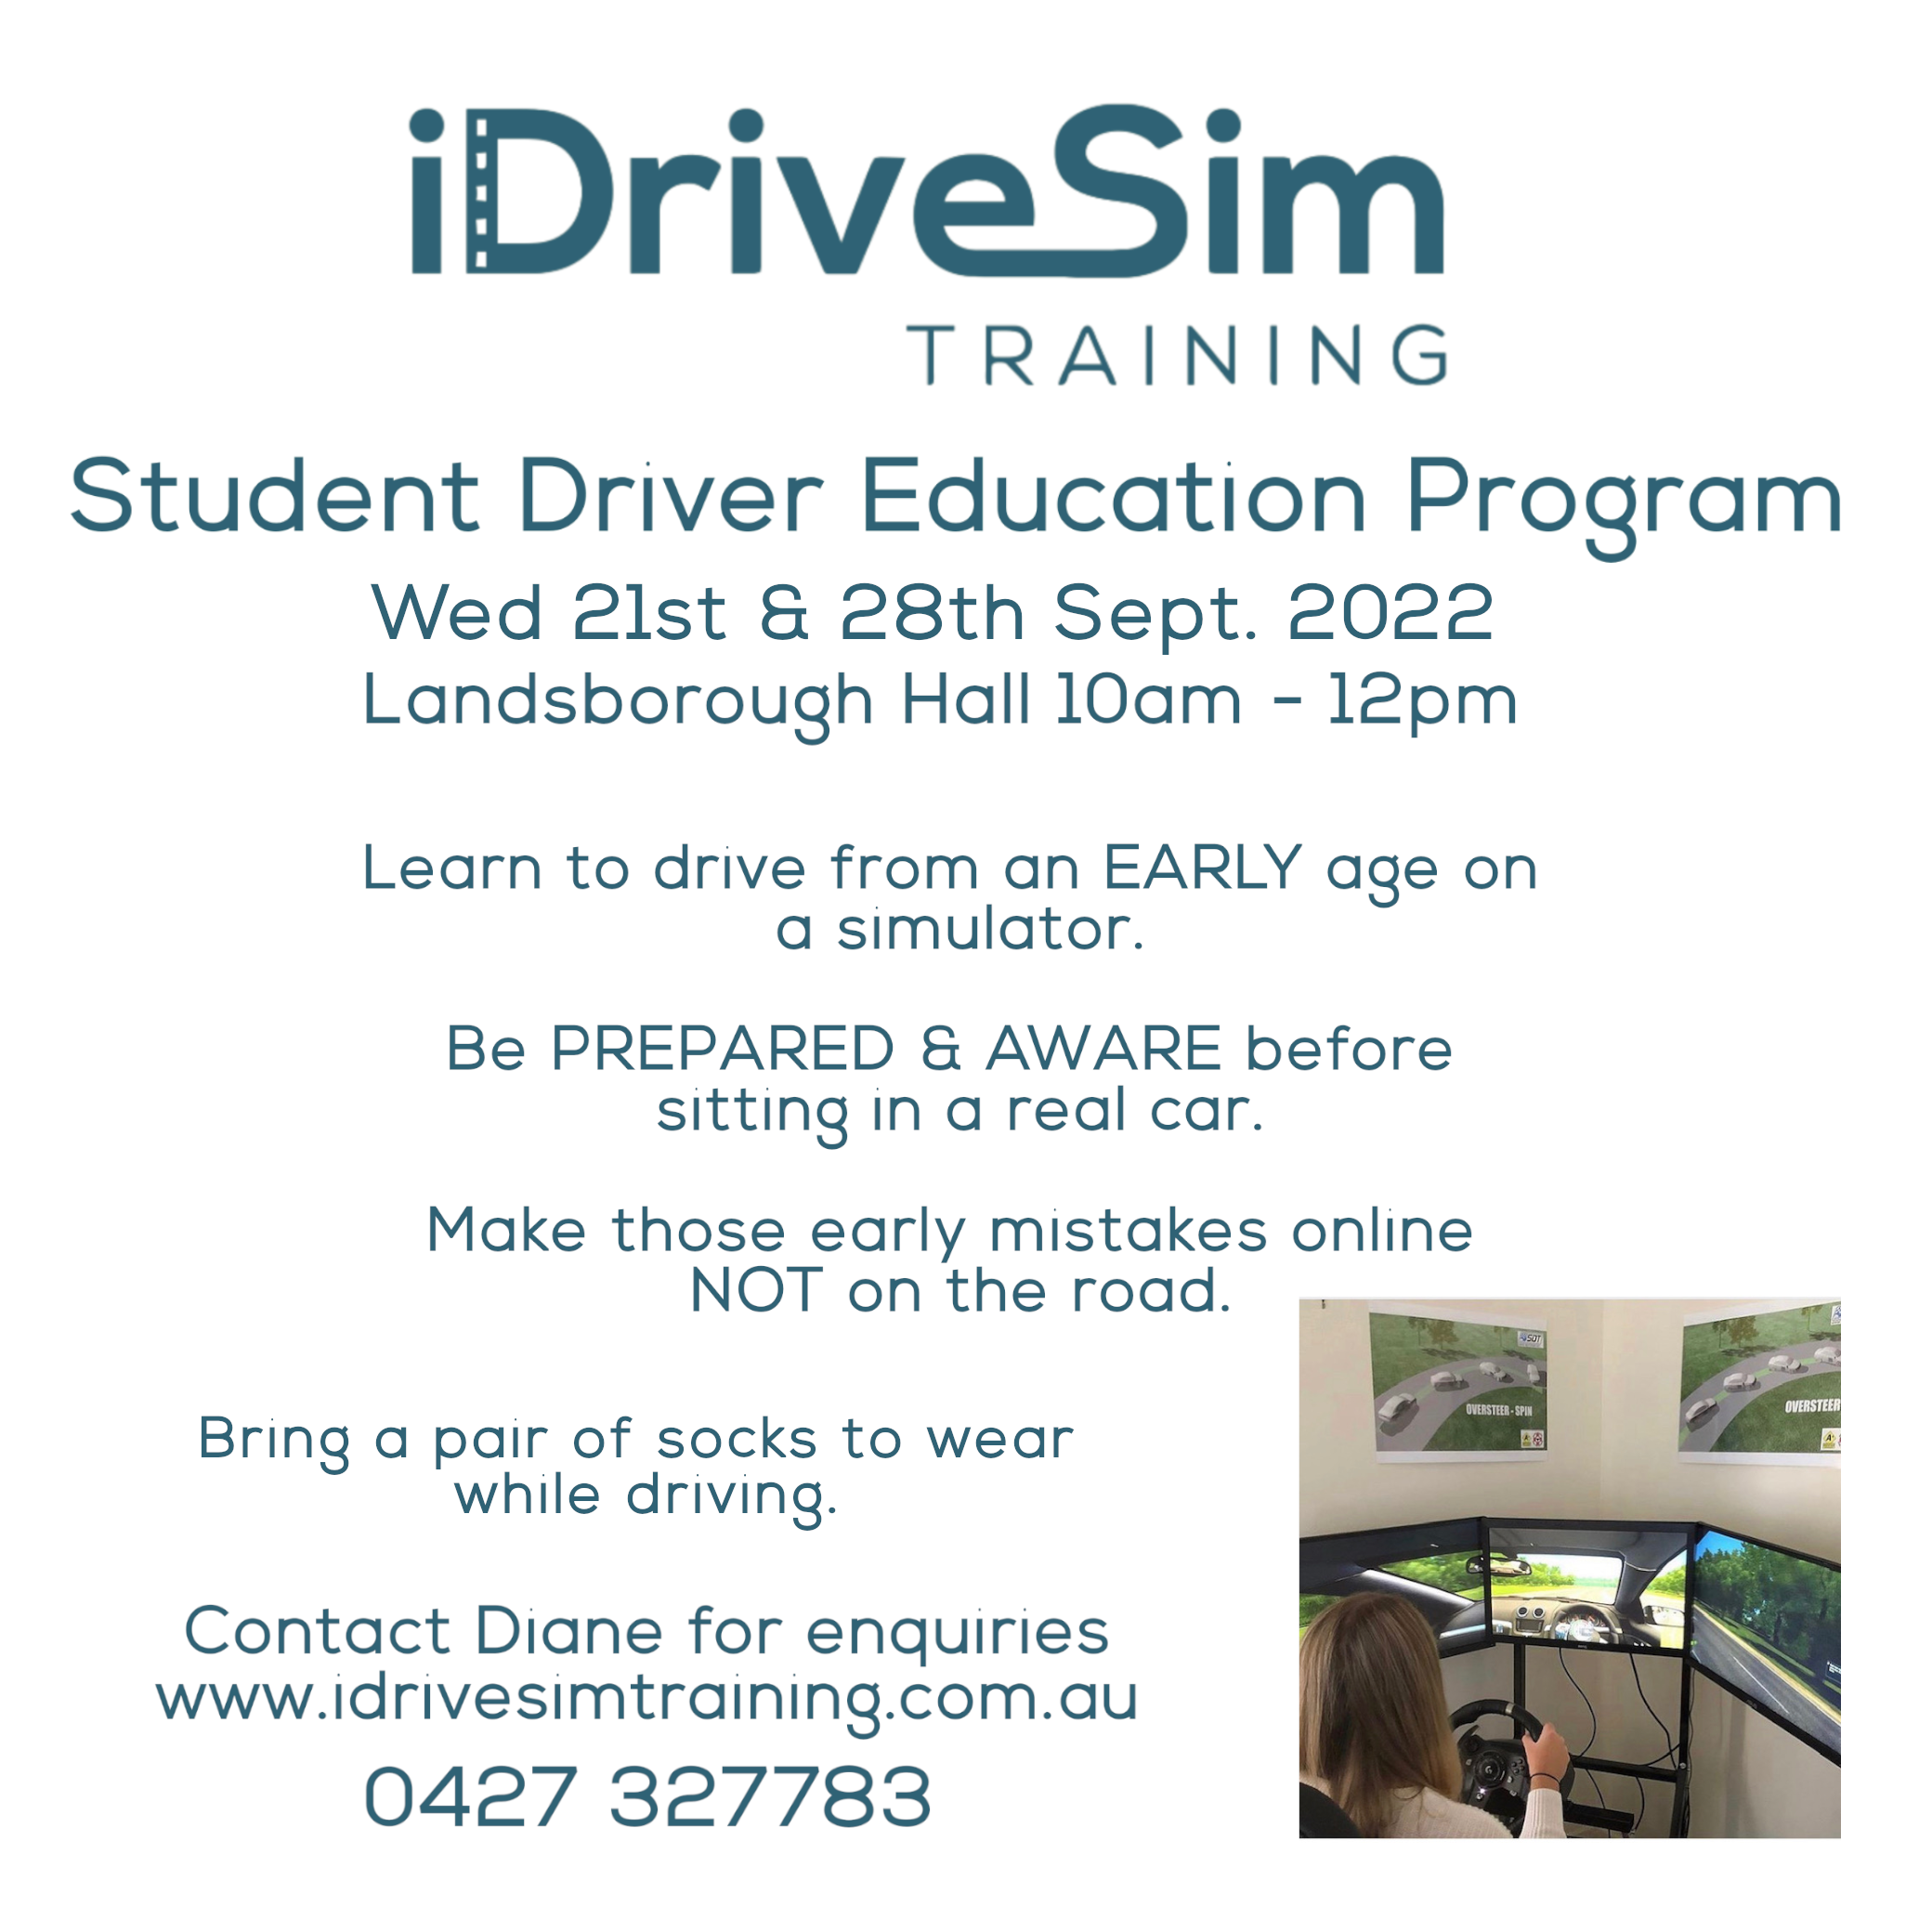 iDriveSim- Training. Student Driver Education Program